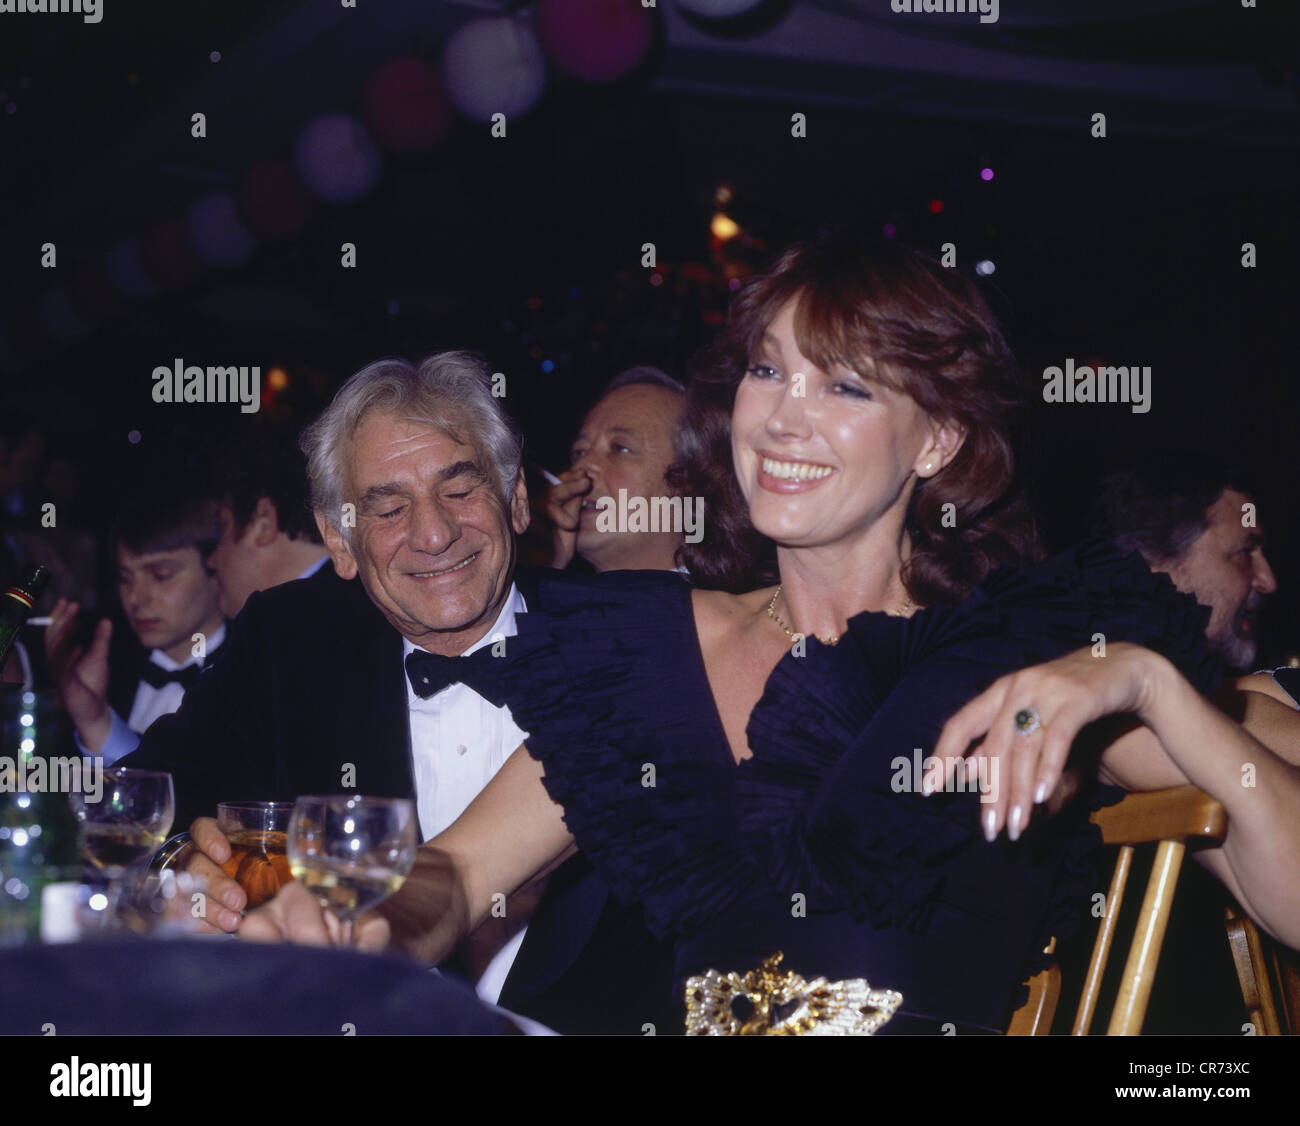 Schuermann, Petra, 15.9.1935 - 13.1.2010, German actress, TV presenter, half length, with Leonard Bernstein, Mathaeser Film Ball, Munich, Germany, 1981, Stock Photo